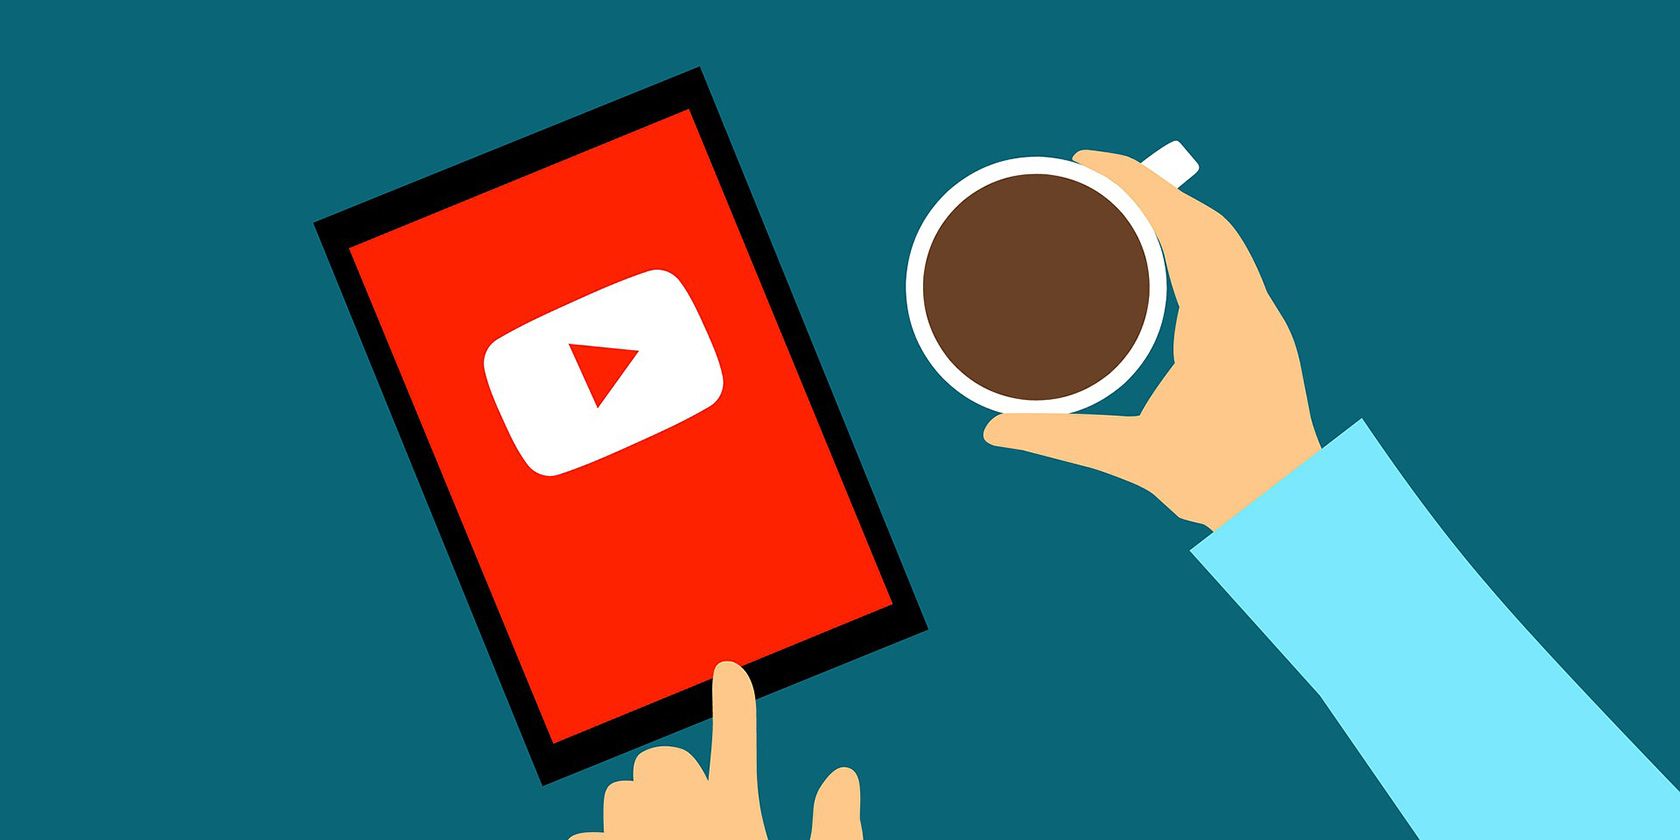 Cartoon image of YouTube logo on tablet with hand around a mug of coffee